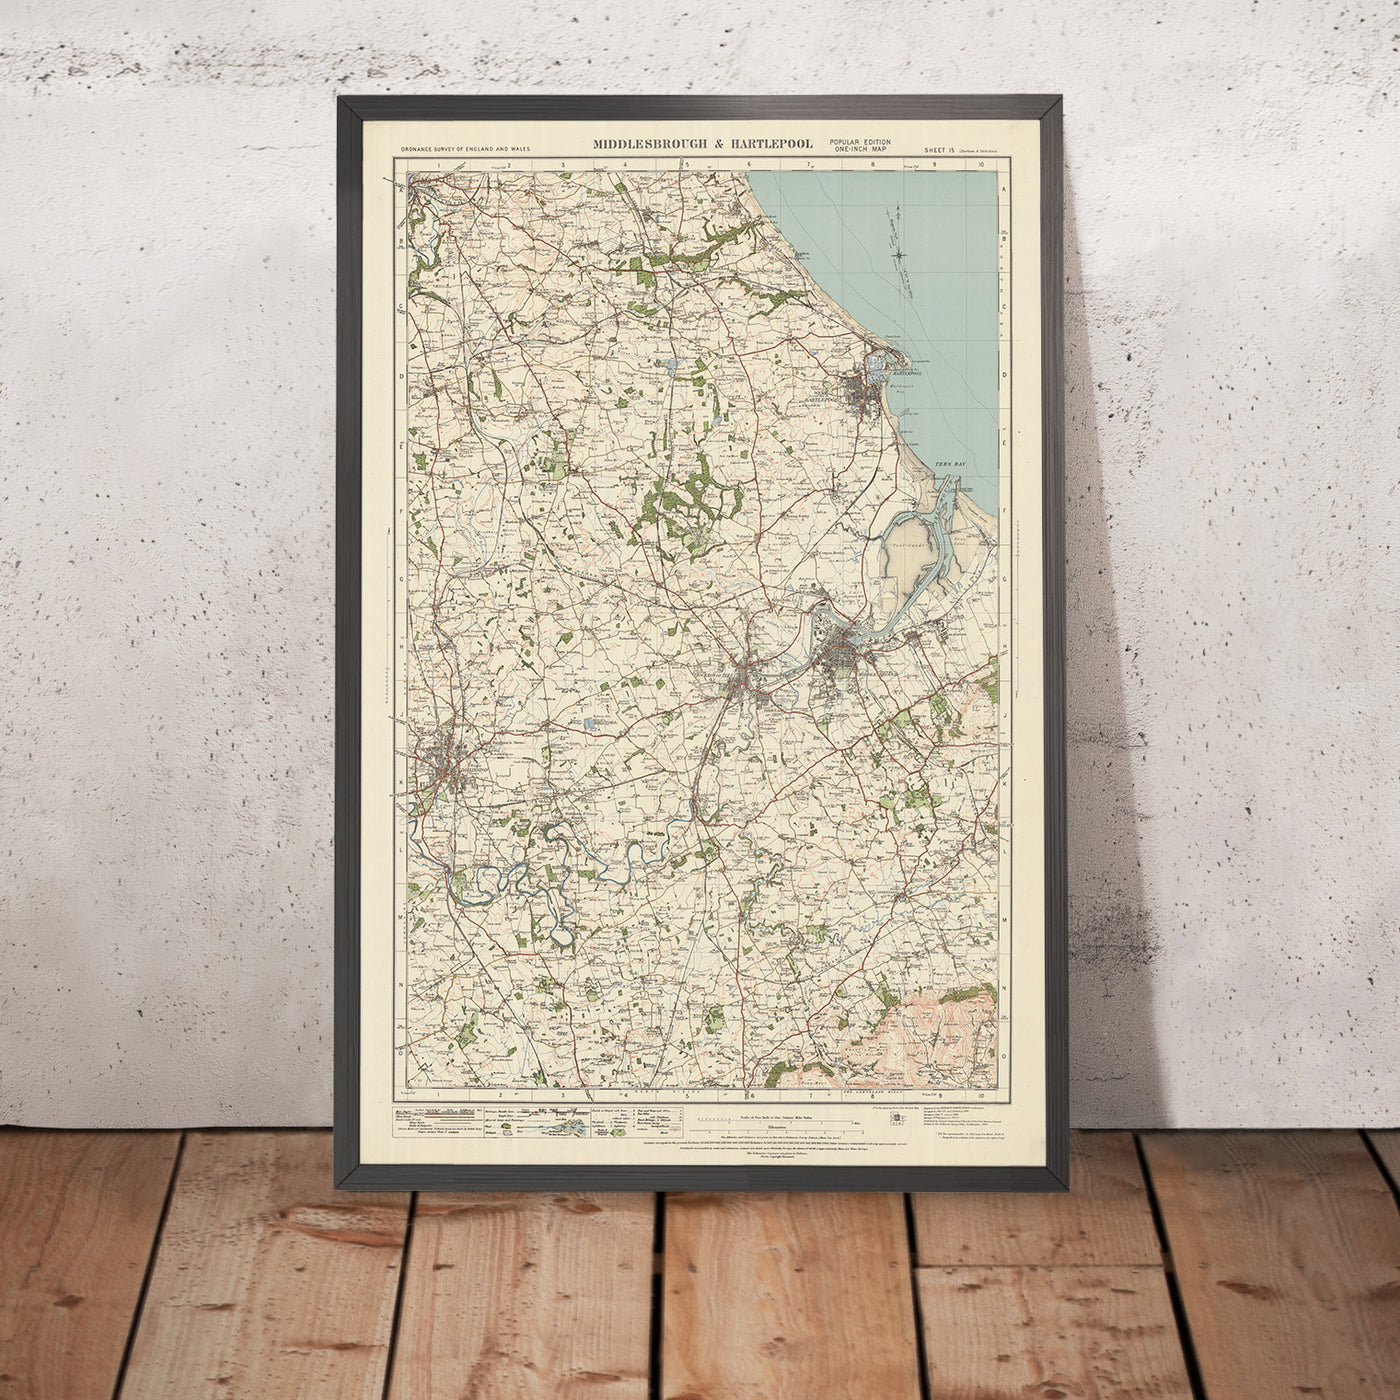 Alte Ordnance Survey Karte, Blatt 15 - Middlesbrough & Hartlepool, 1925: Durham, Thornaby, Seaton Carew, Darlington, Stockton-on-Tees